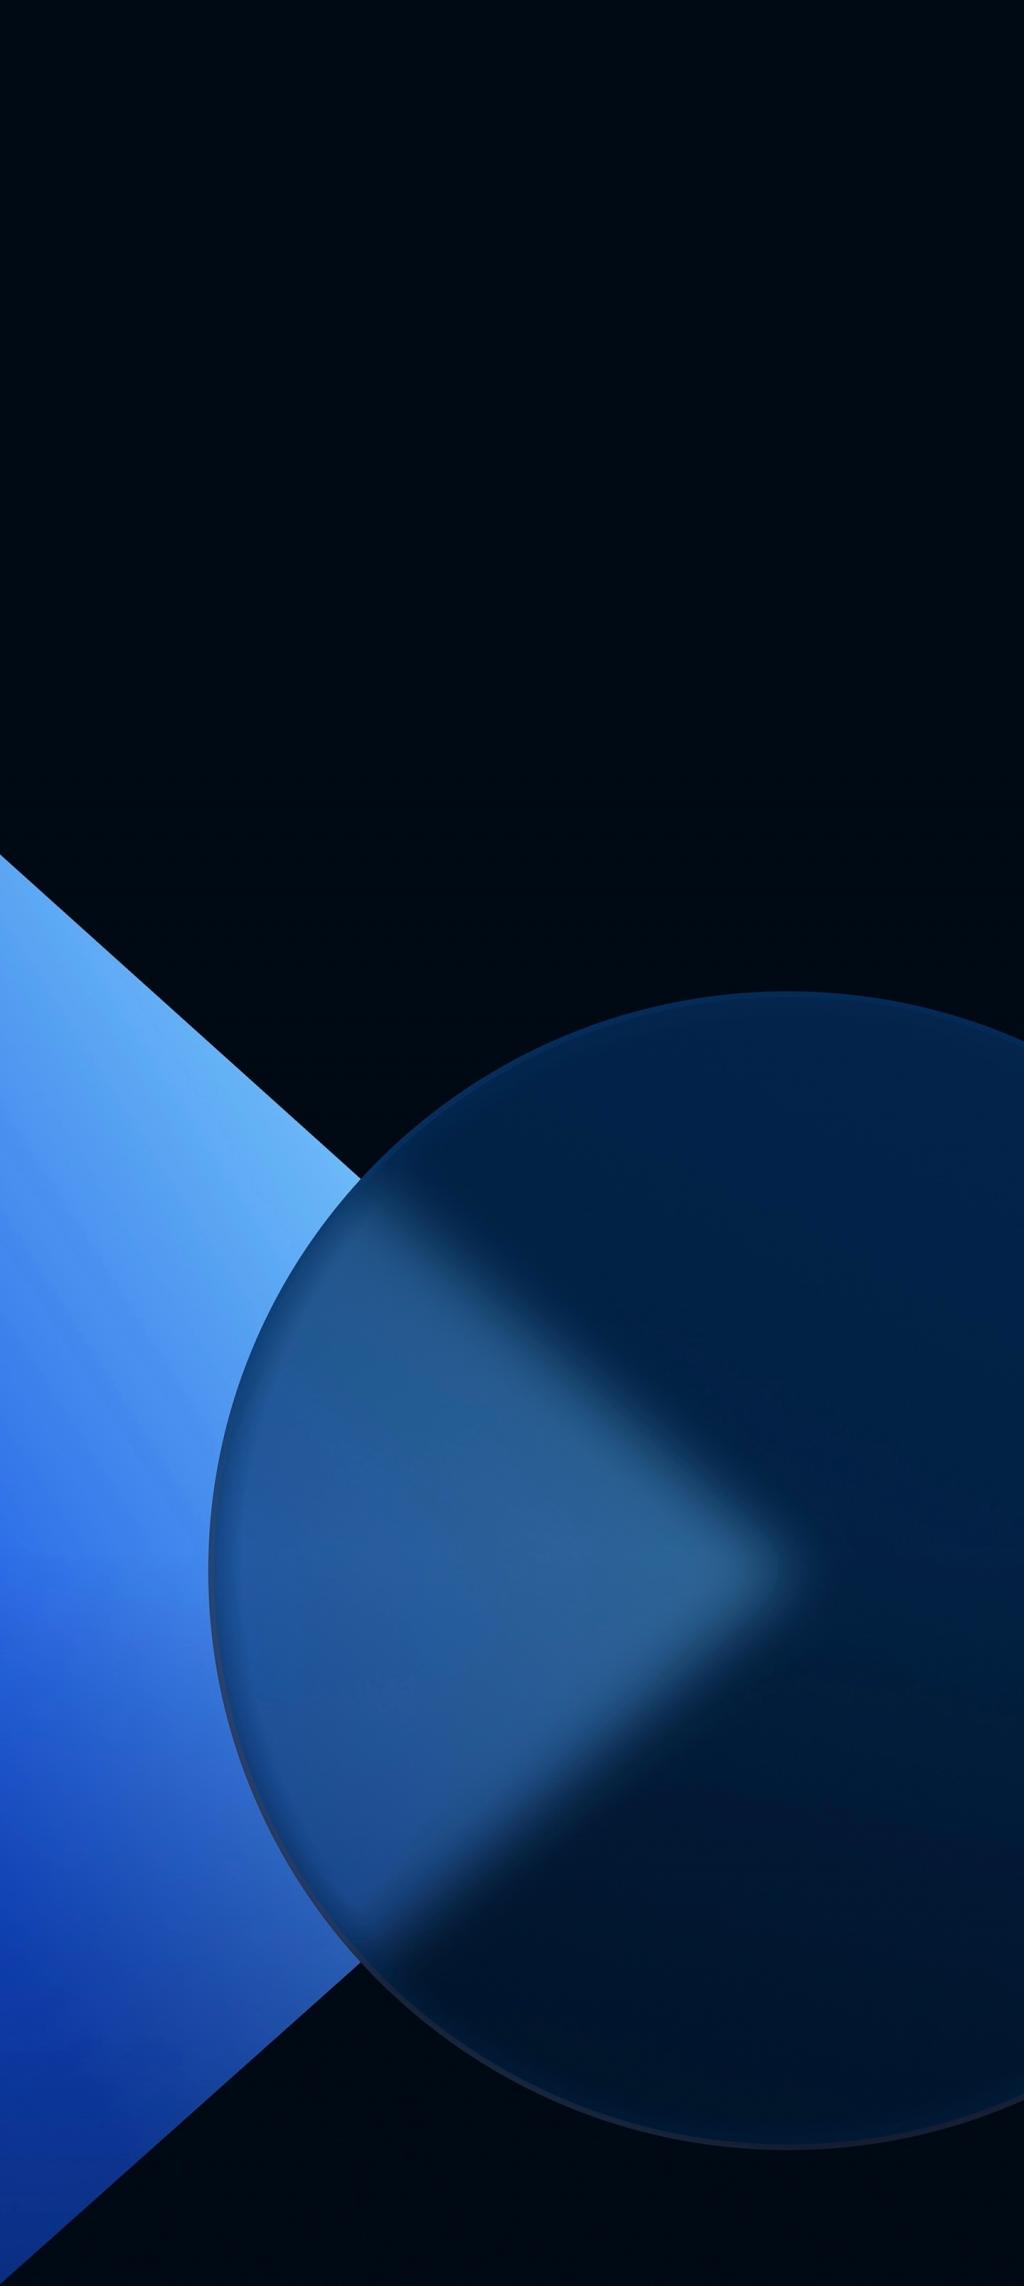 iphone14概念版蓝色壁纸,高清图片,简约